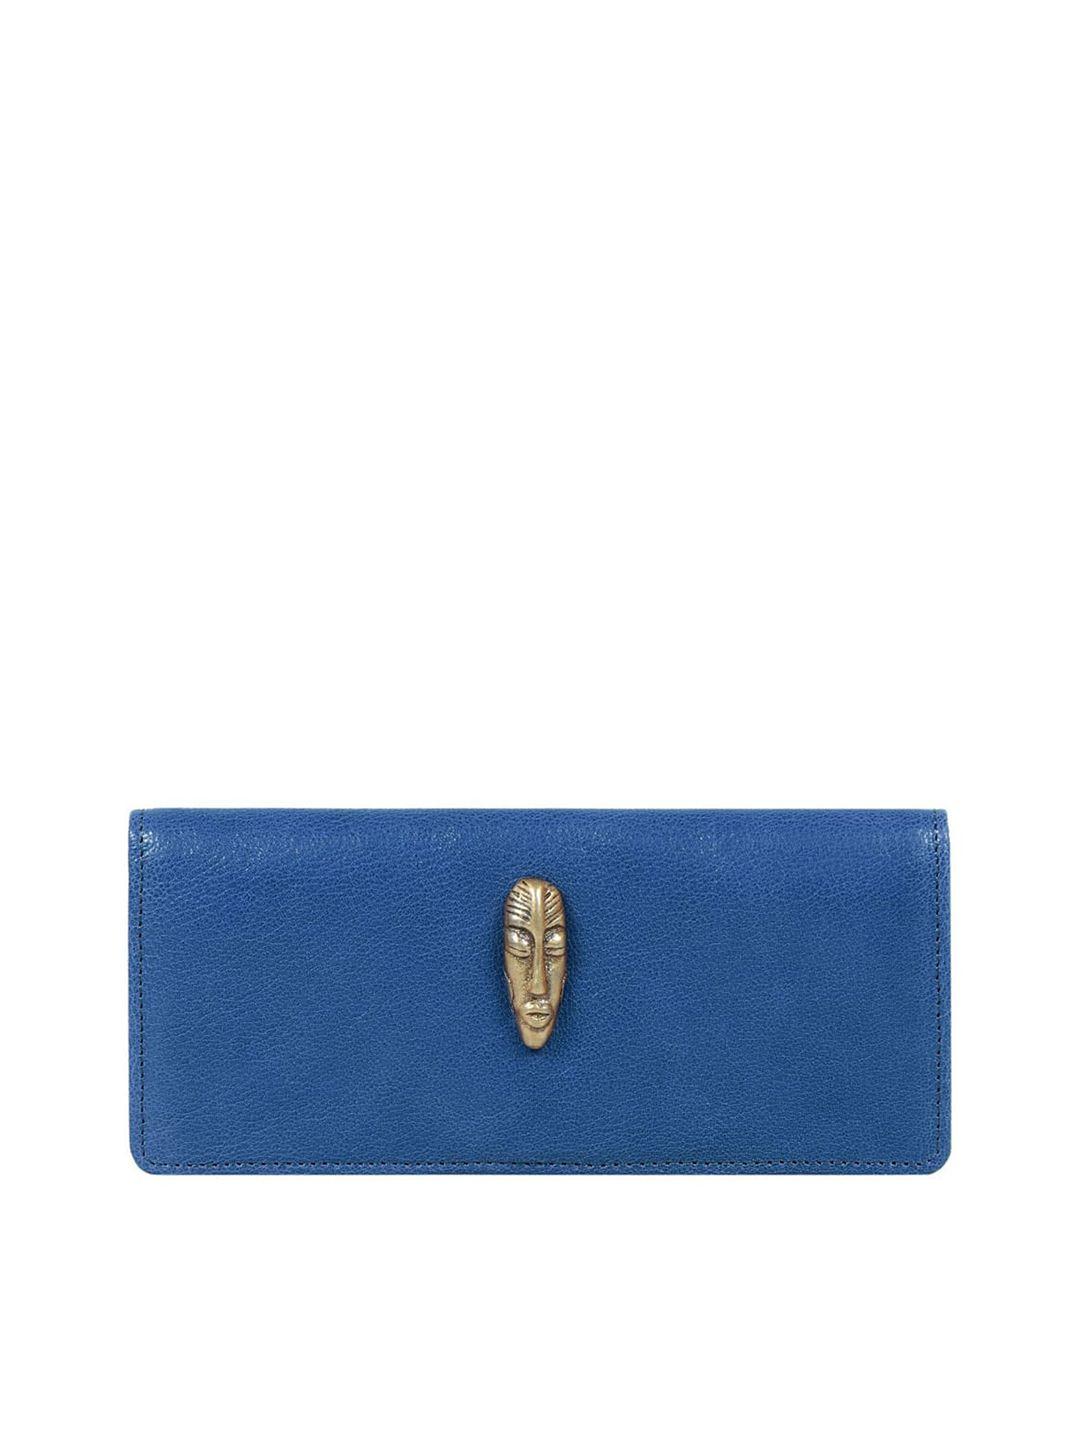 hidesign women blue & black envelope clutch